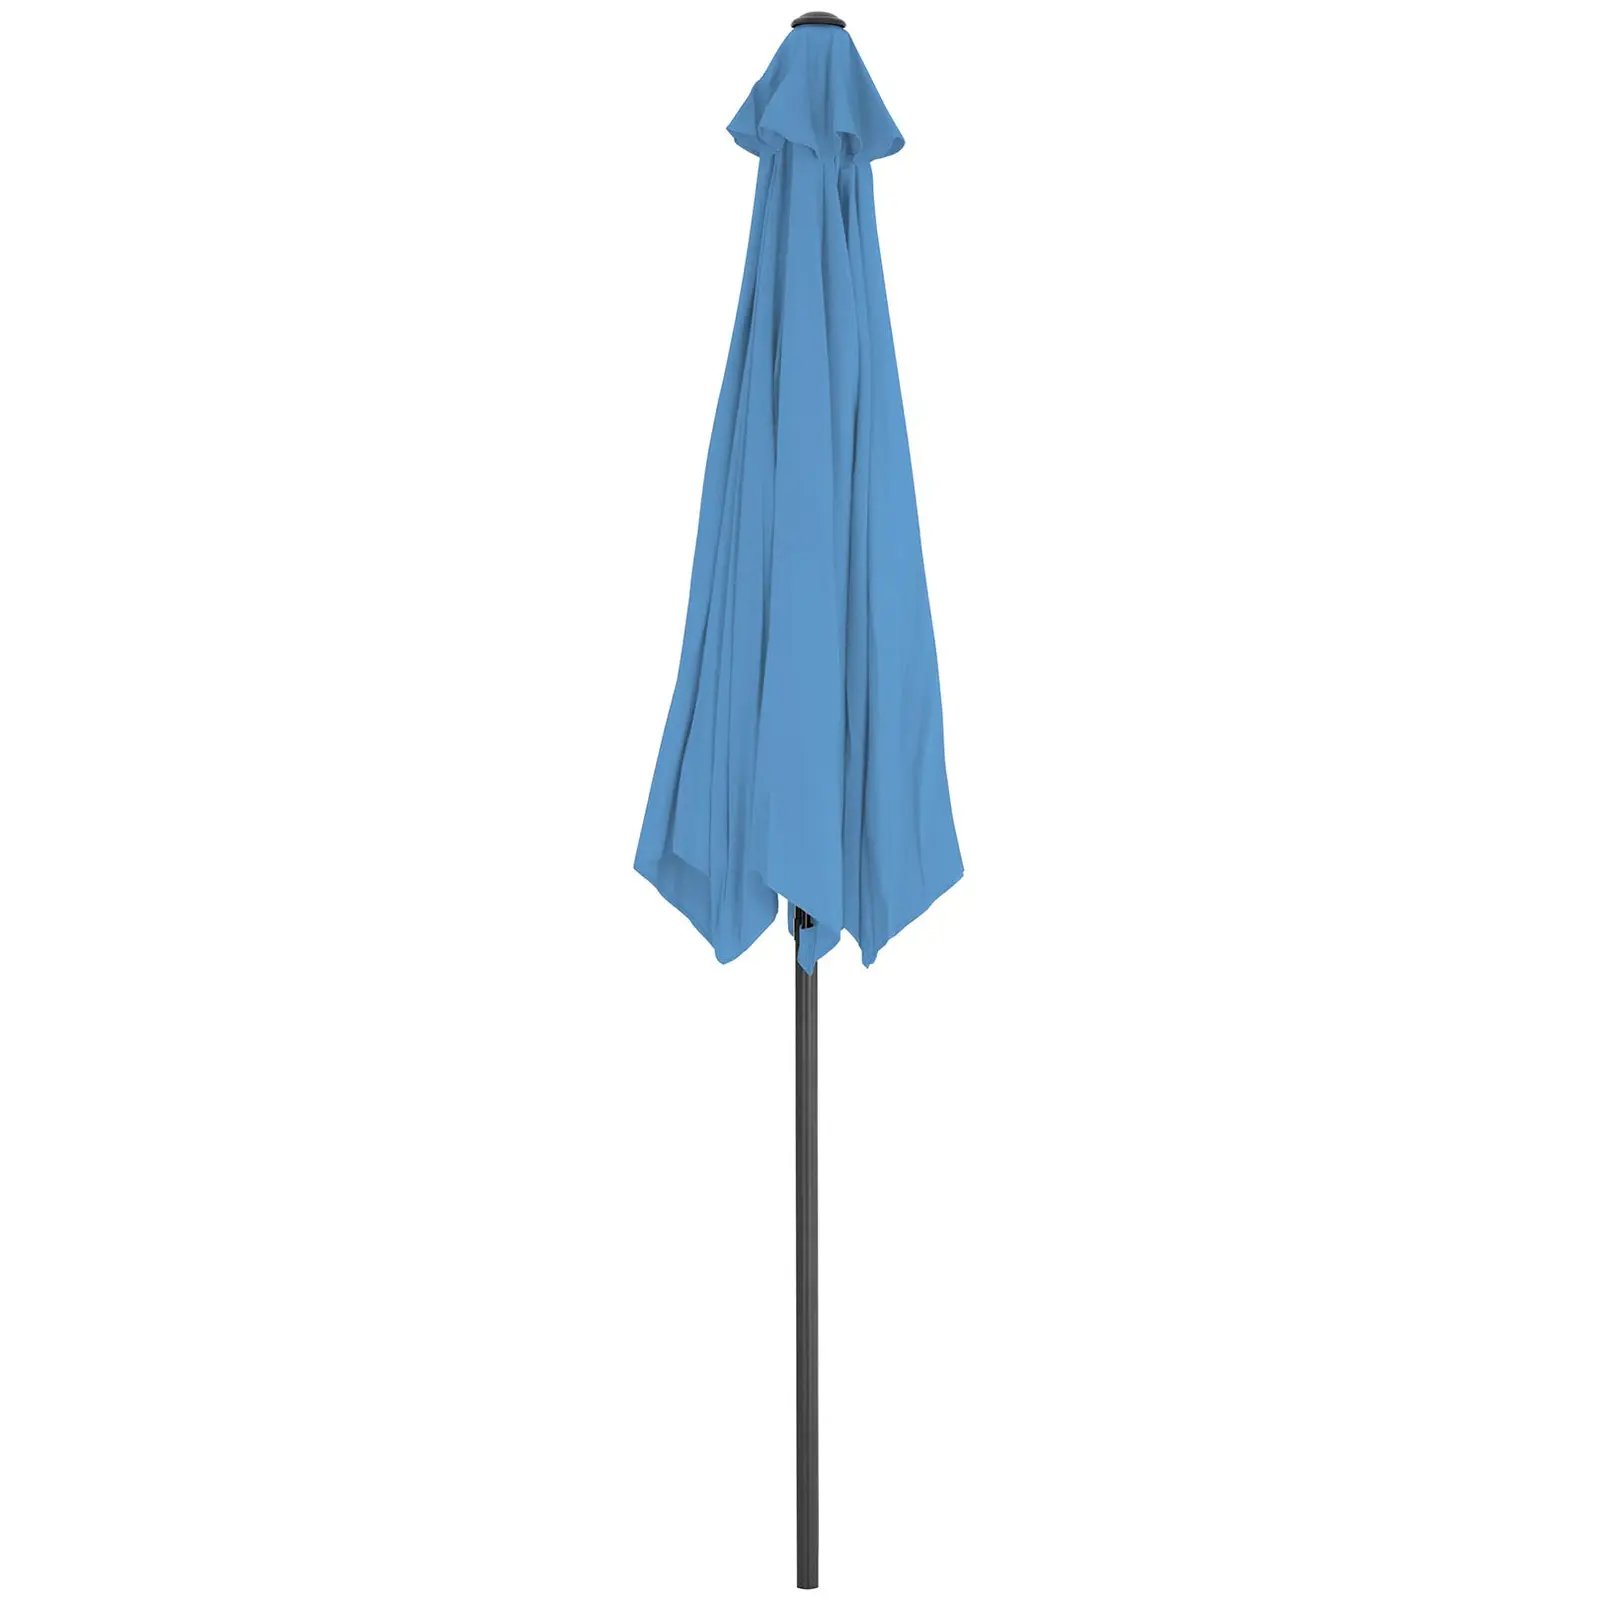 Sonnenschirm groß - blau - sechseckig - Ø 300 cm - neigbar